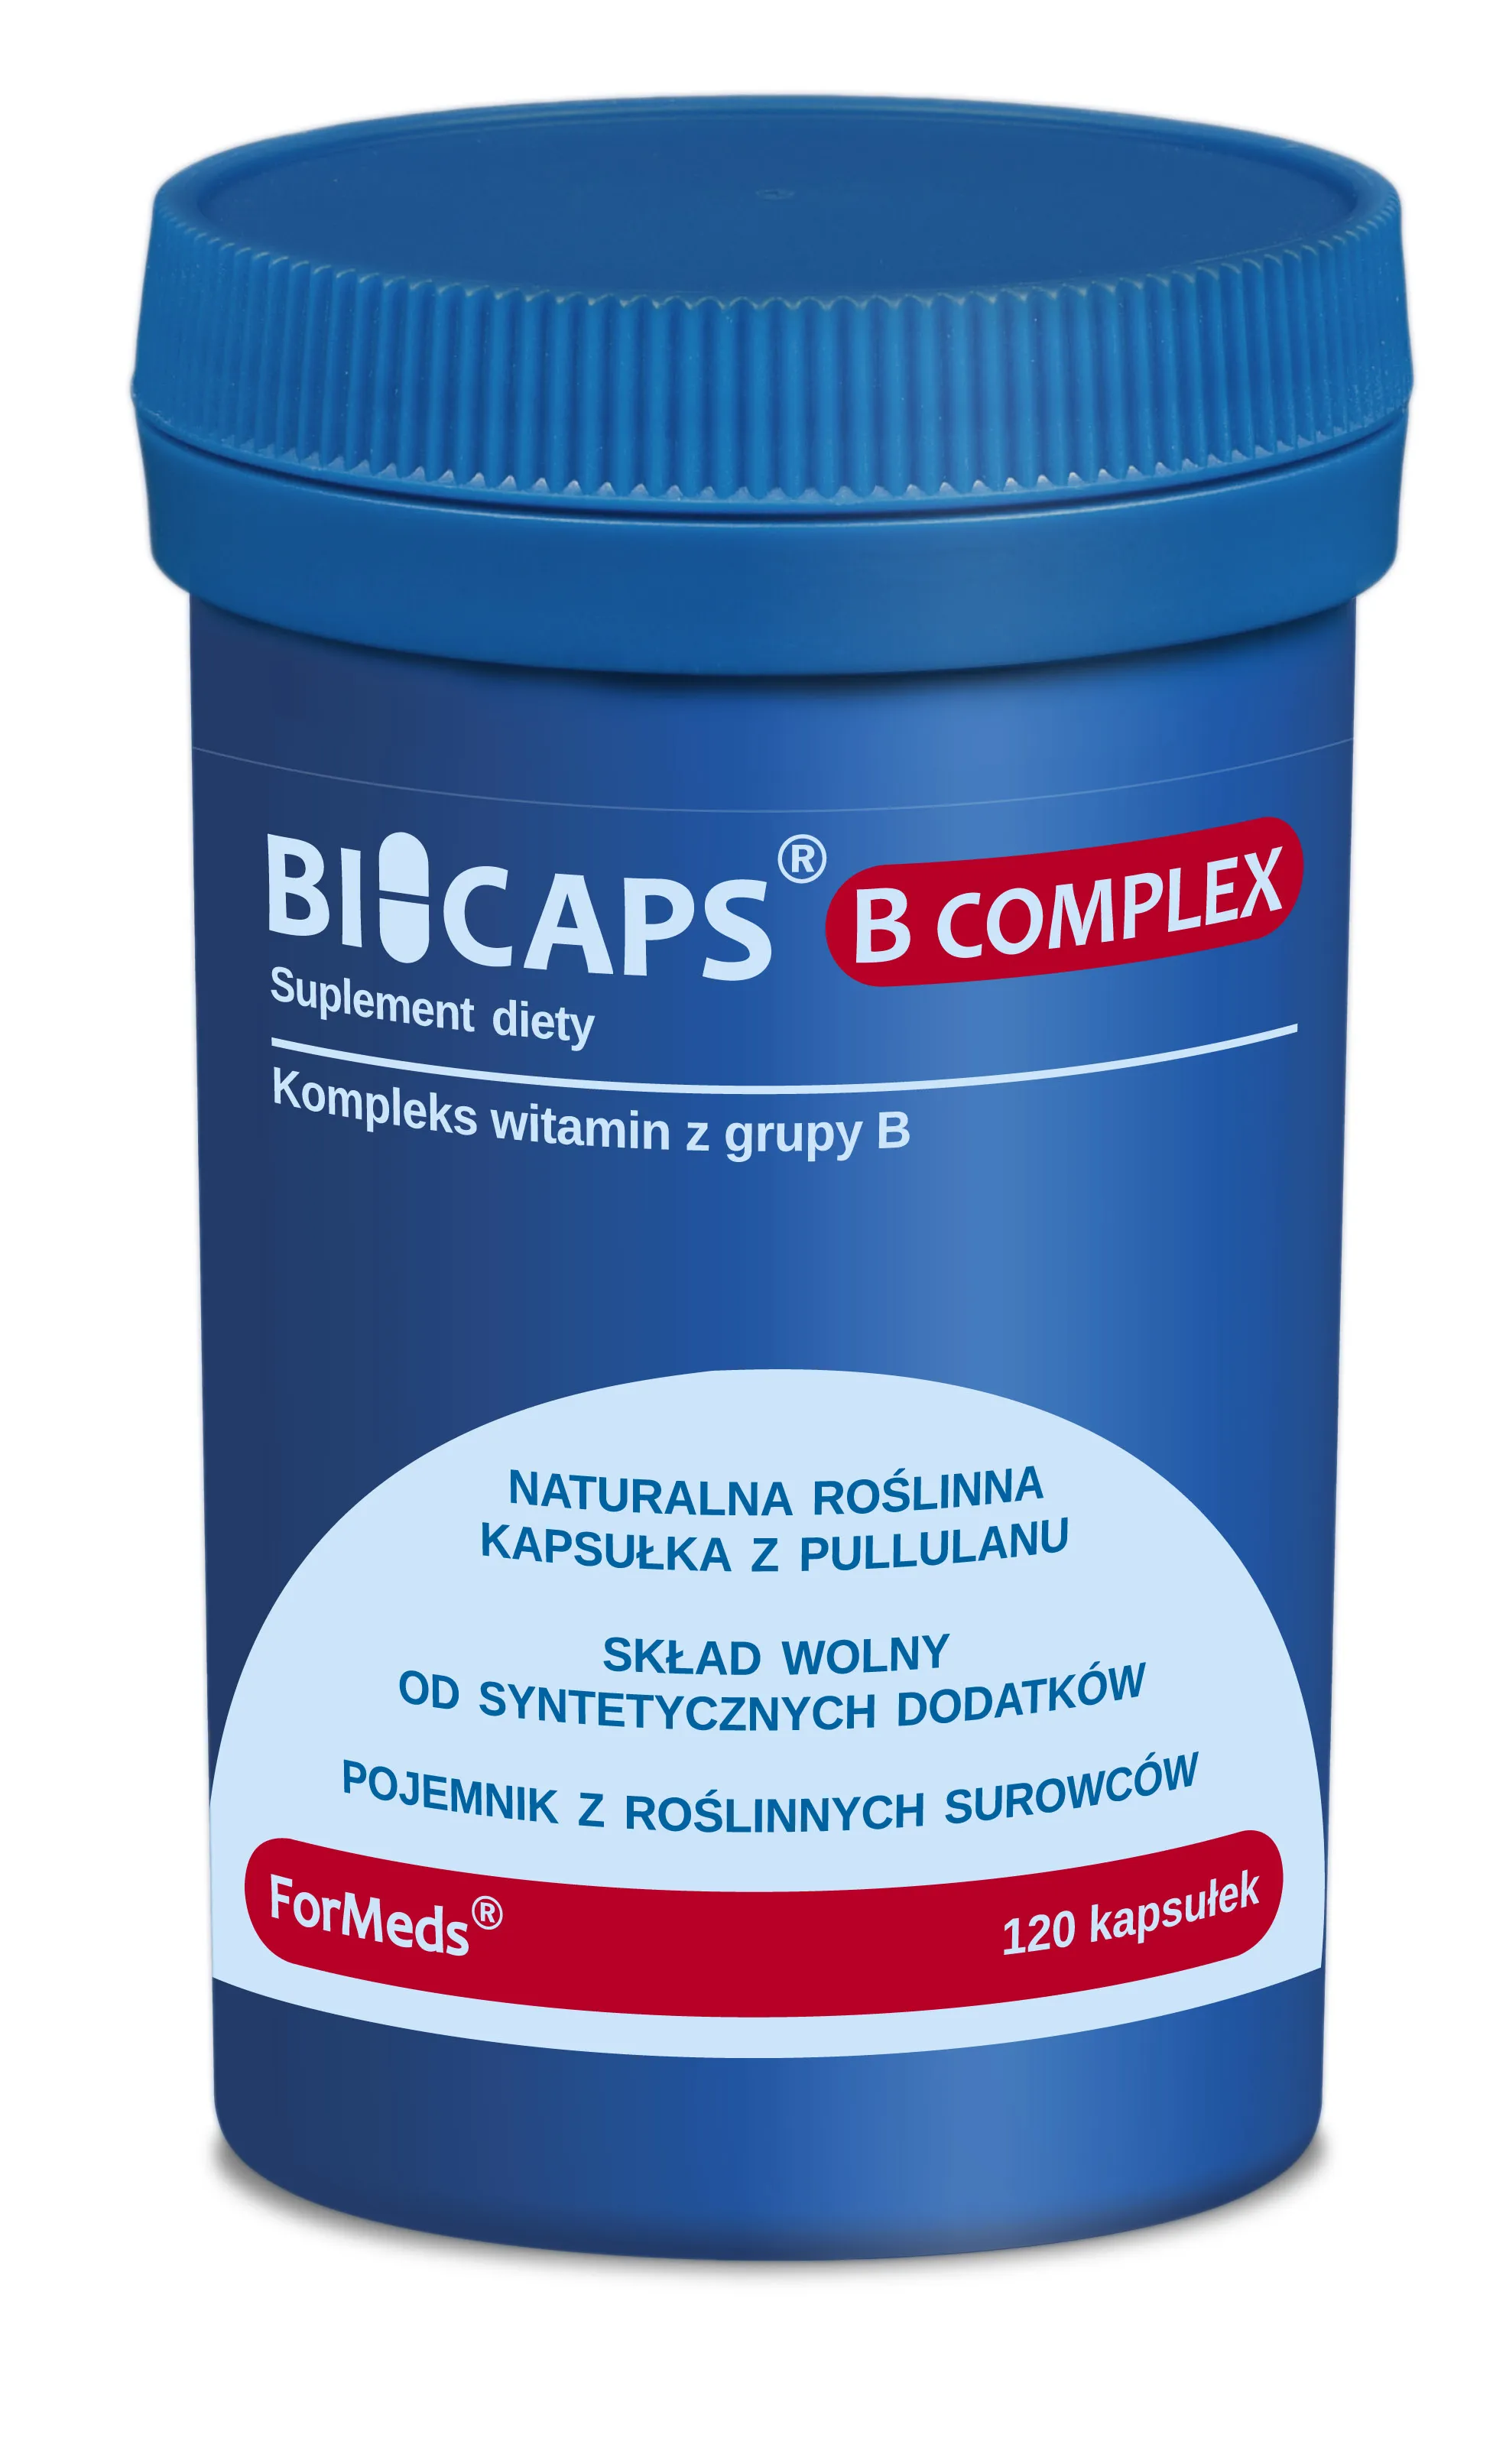 ForMeds Bicaps B Complex, suplement diety, 120 kapsułek